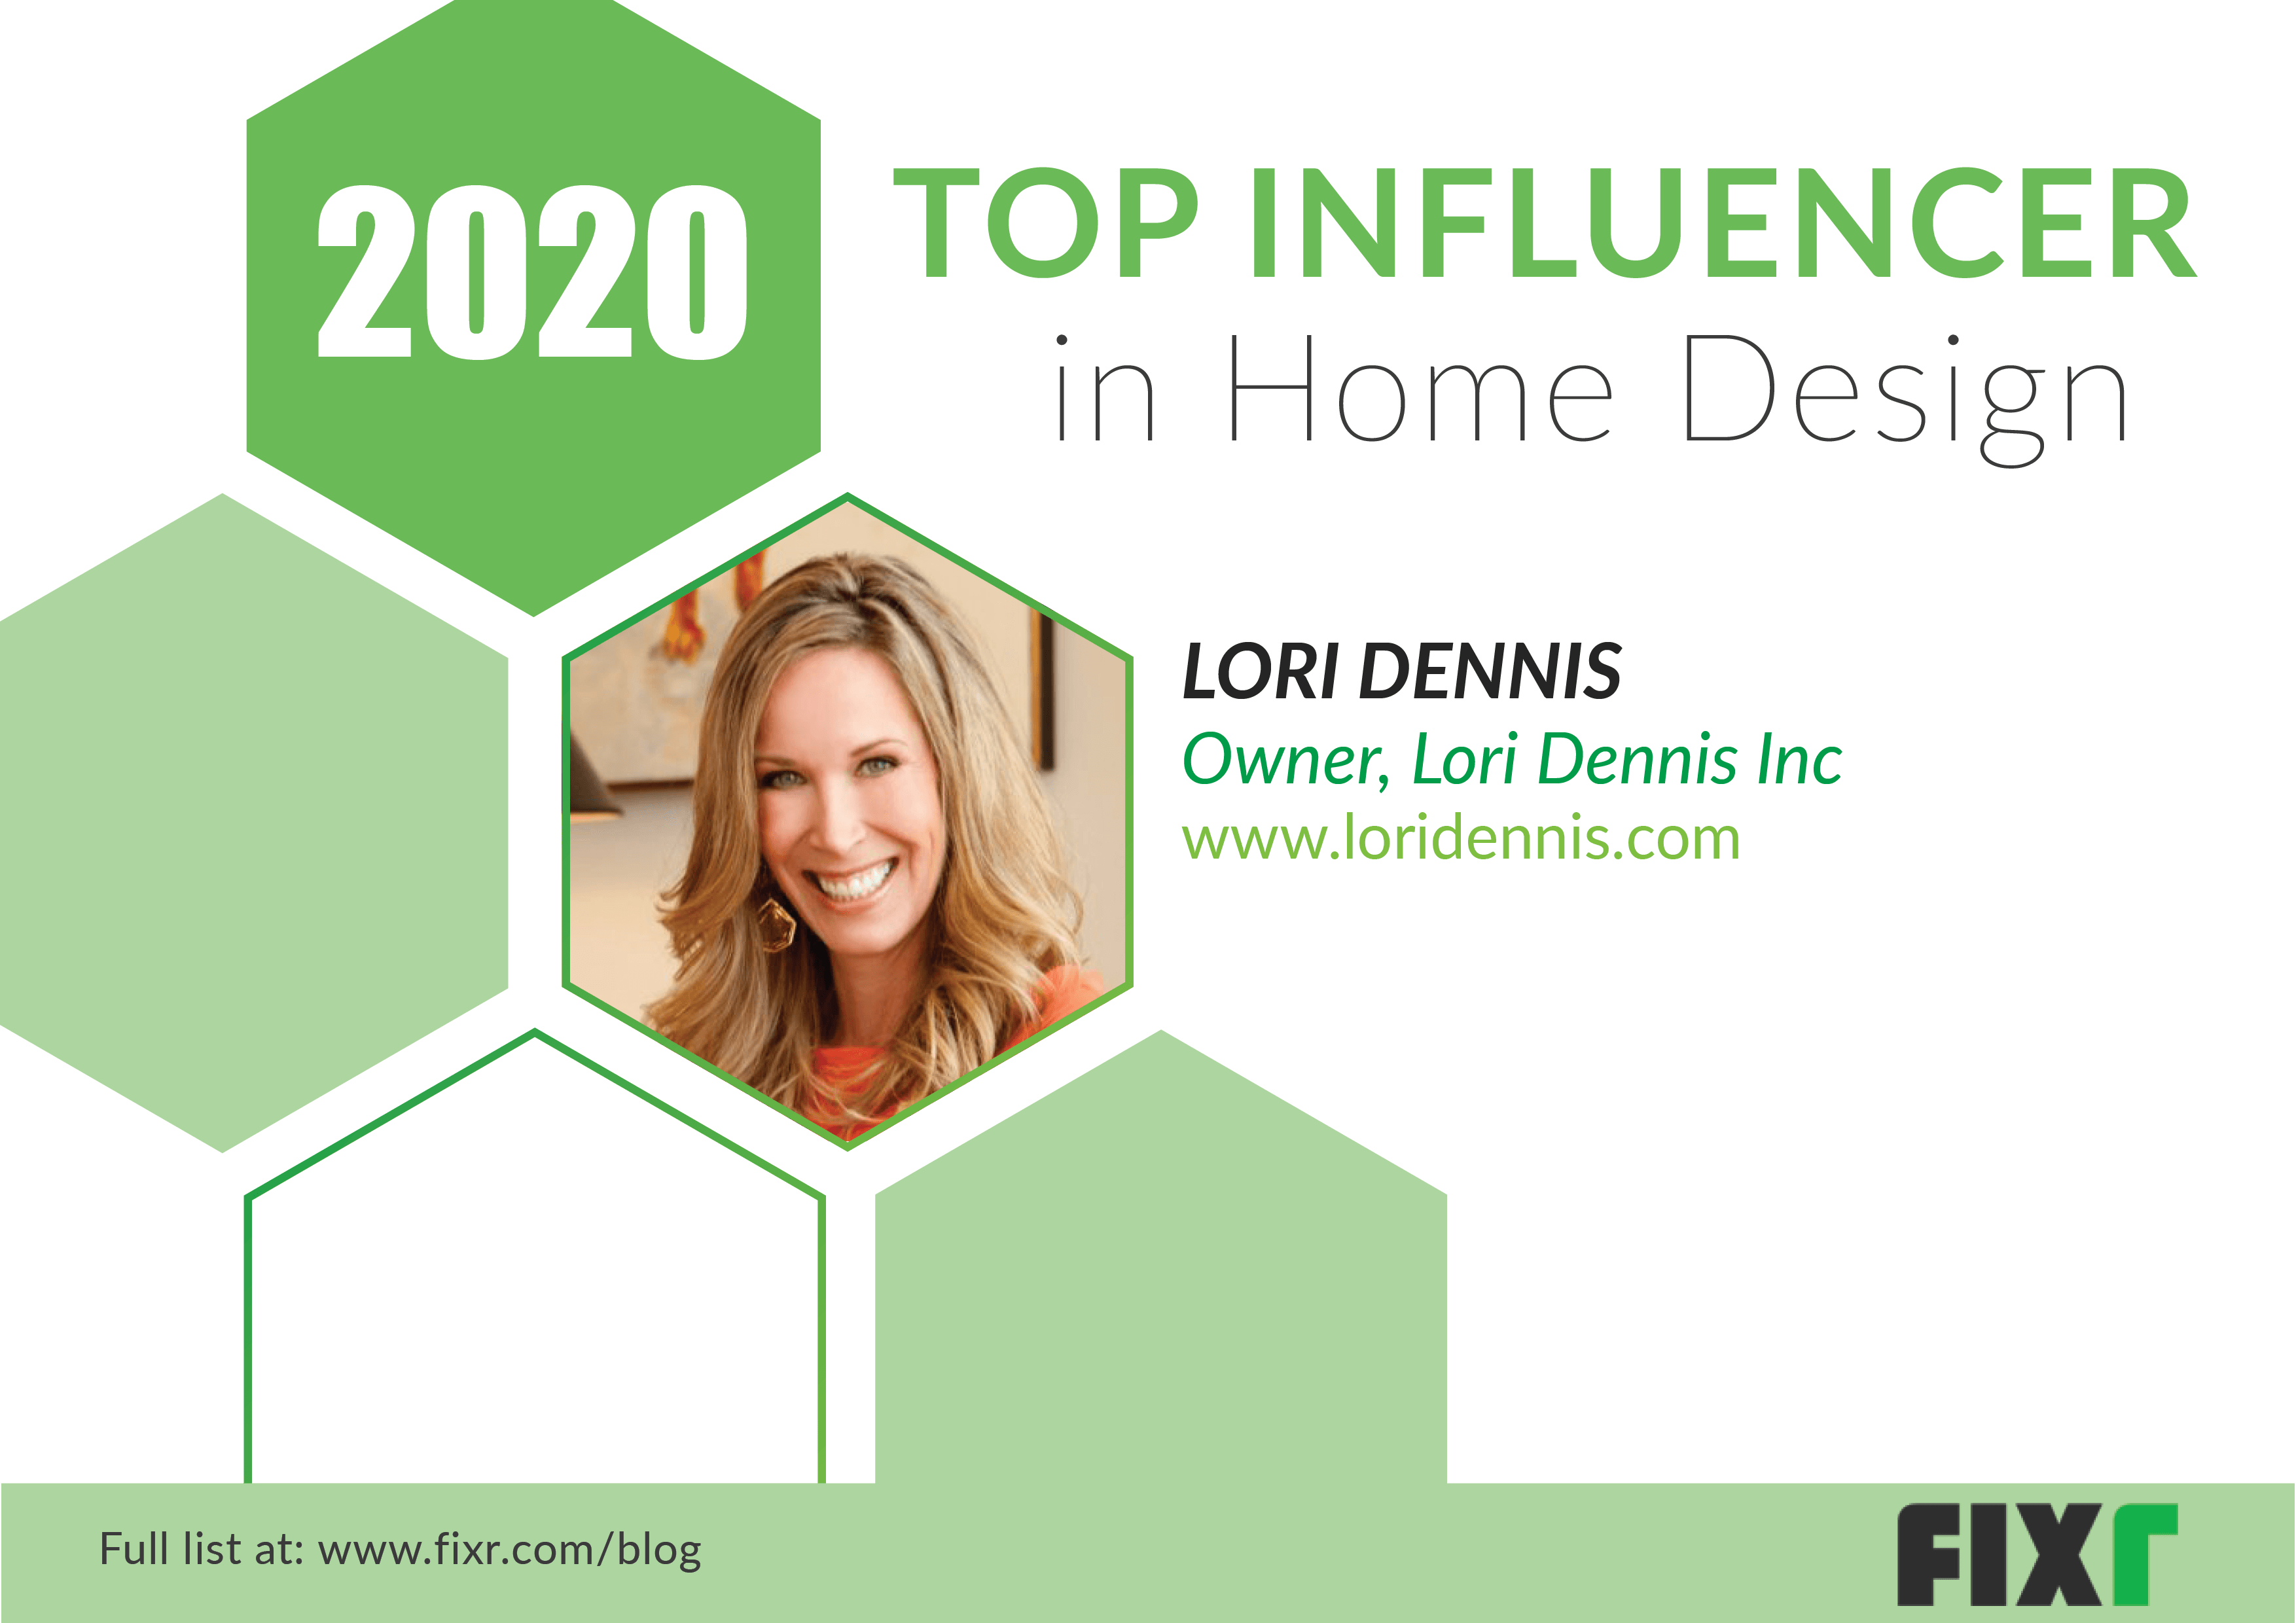 Lori Dennis is the top interior design influencer in america according to fixr.com